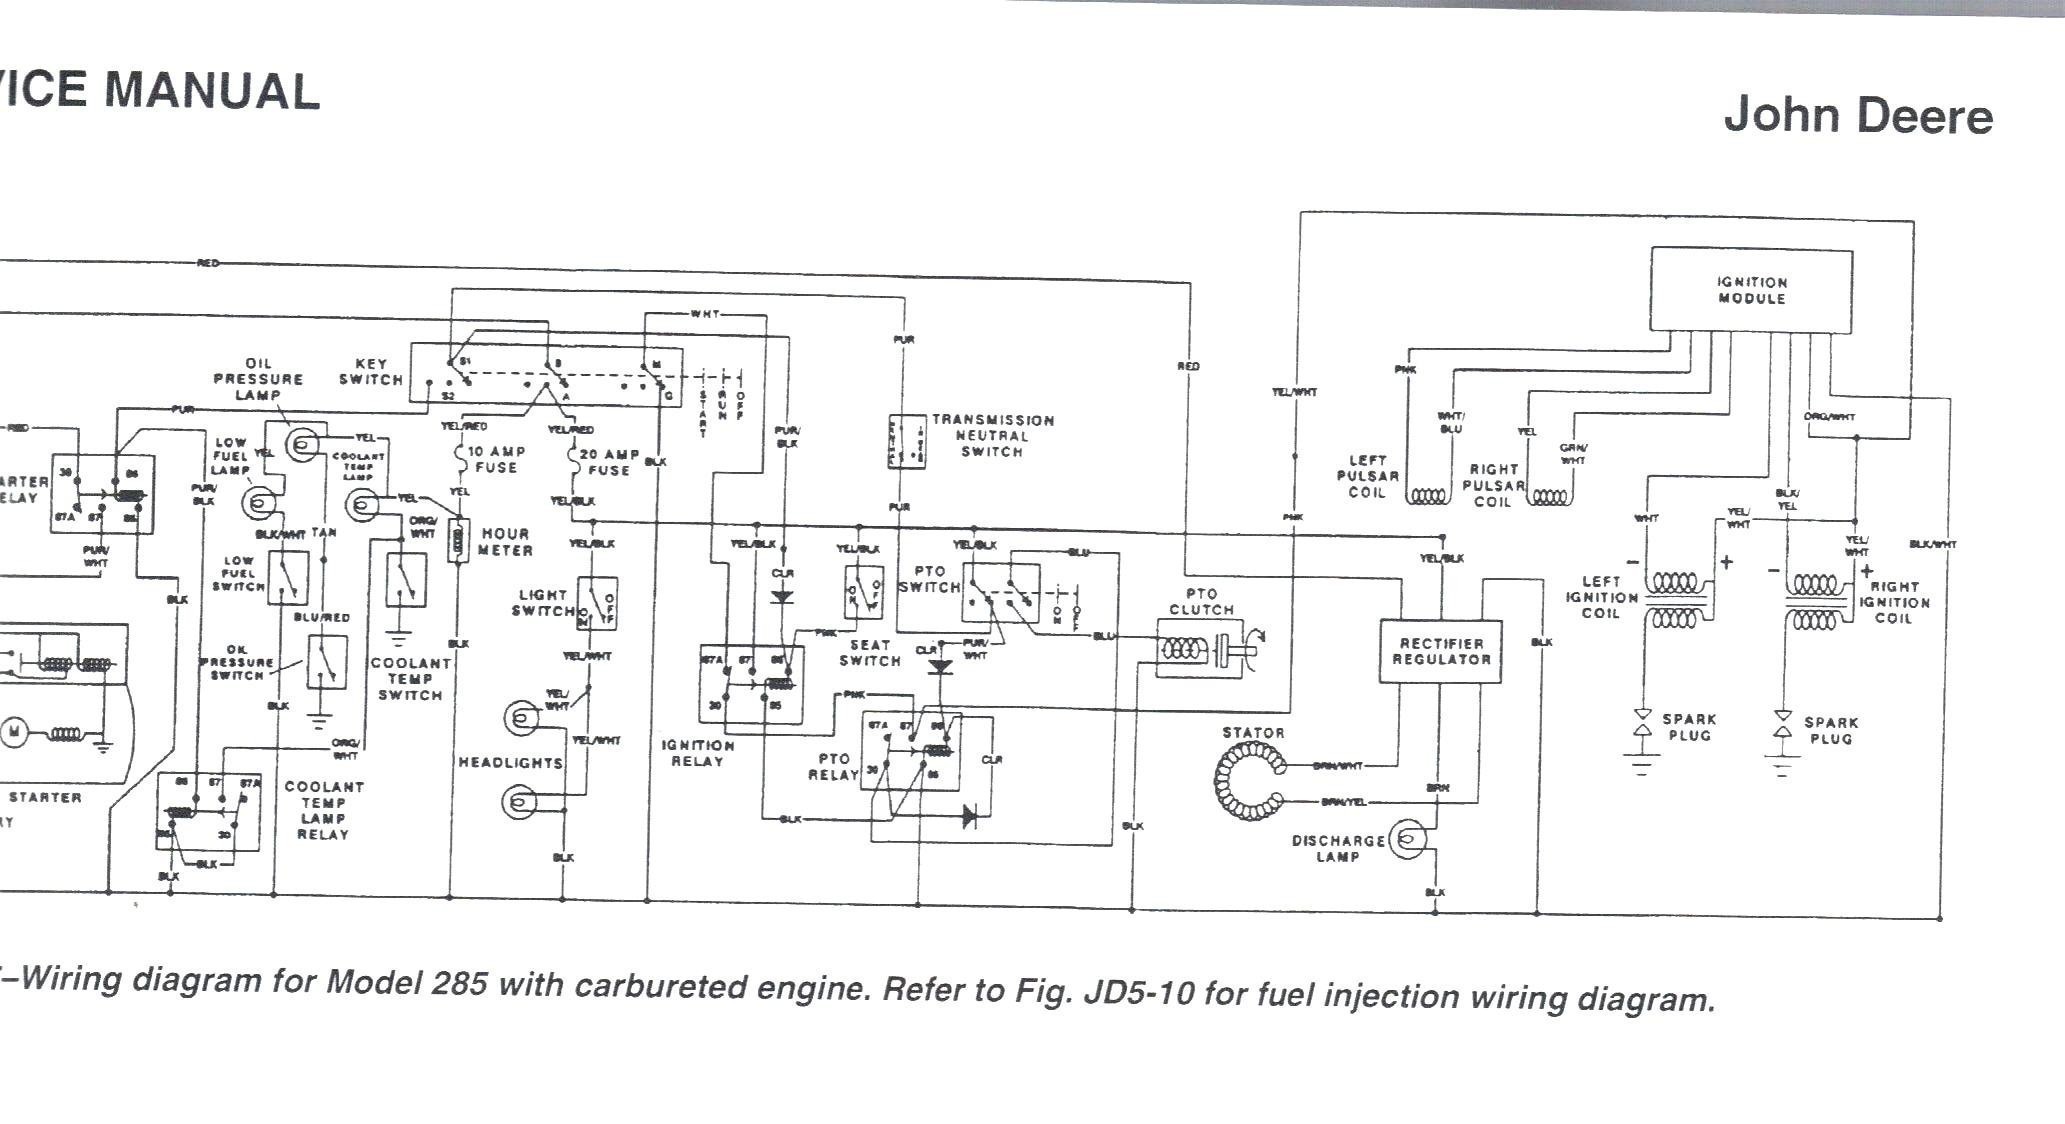 John Deere L110 Wiring Diagram Electrical Circuit Wiring Diagram For John Deere Lt155 Inspirationa